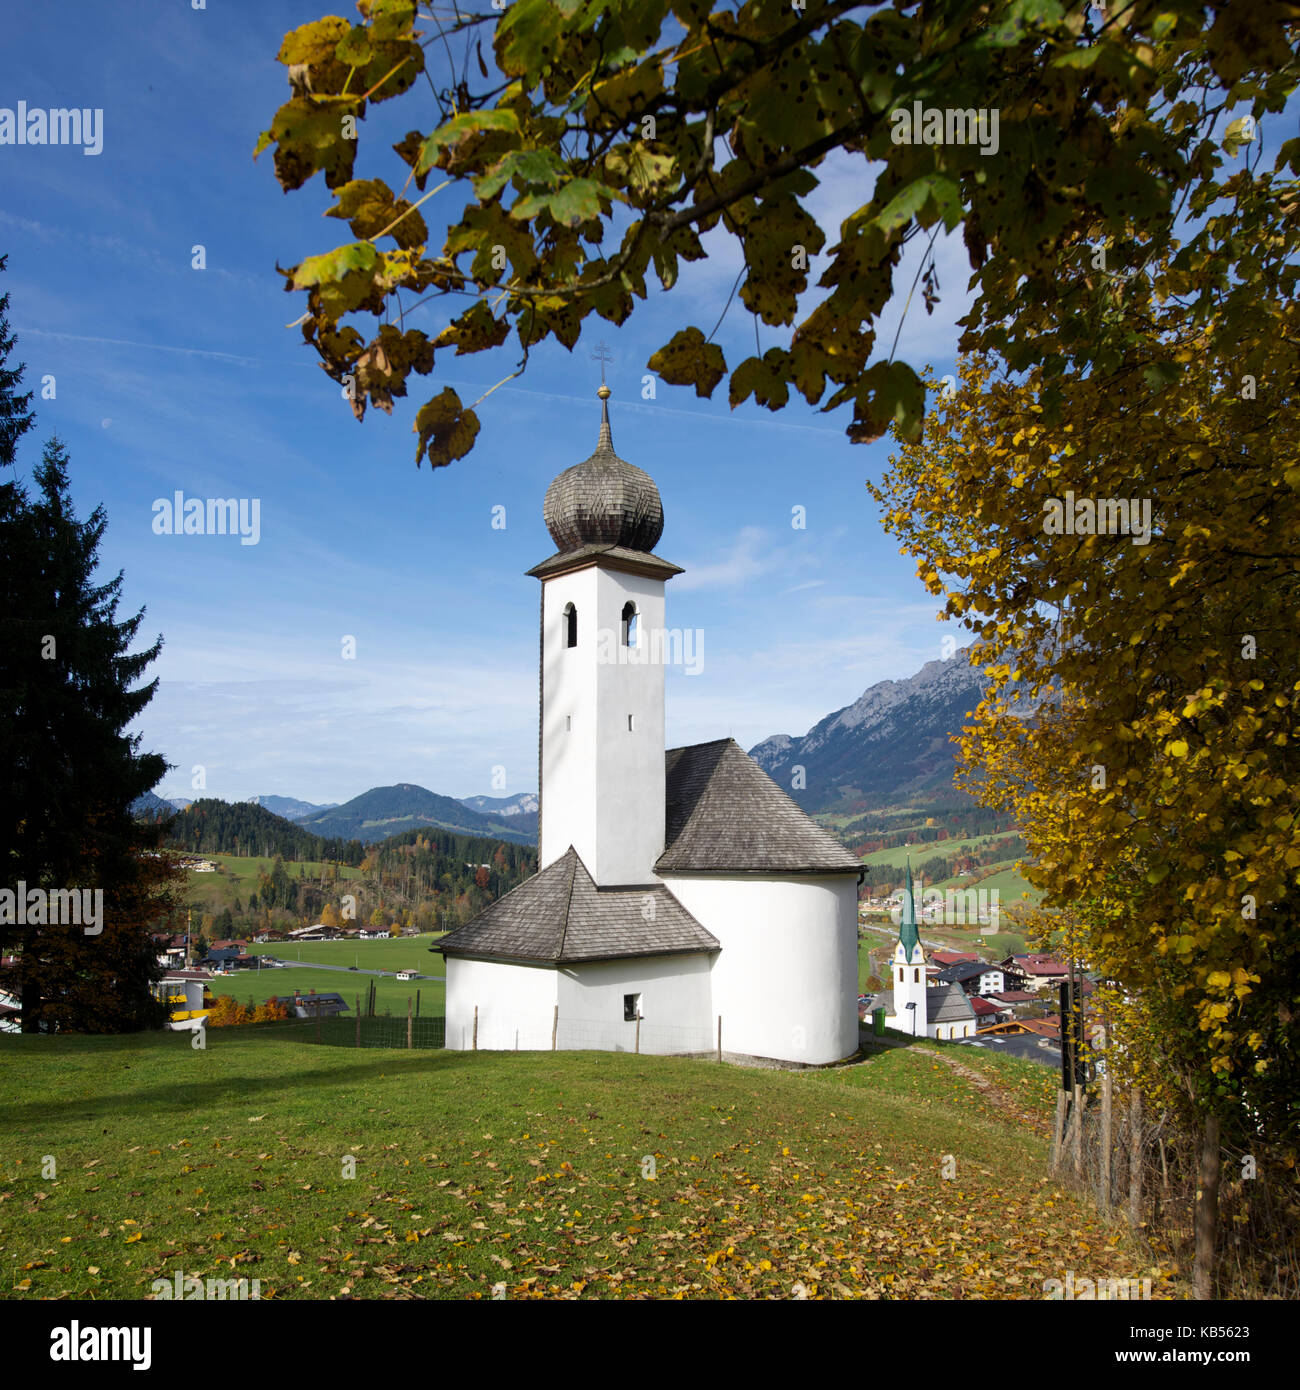 Austria, Tyrol, Ellmau, typical small village and church before the Wilder Kaiser mountains Stock Photo